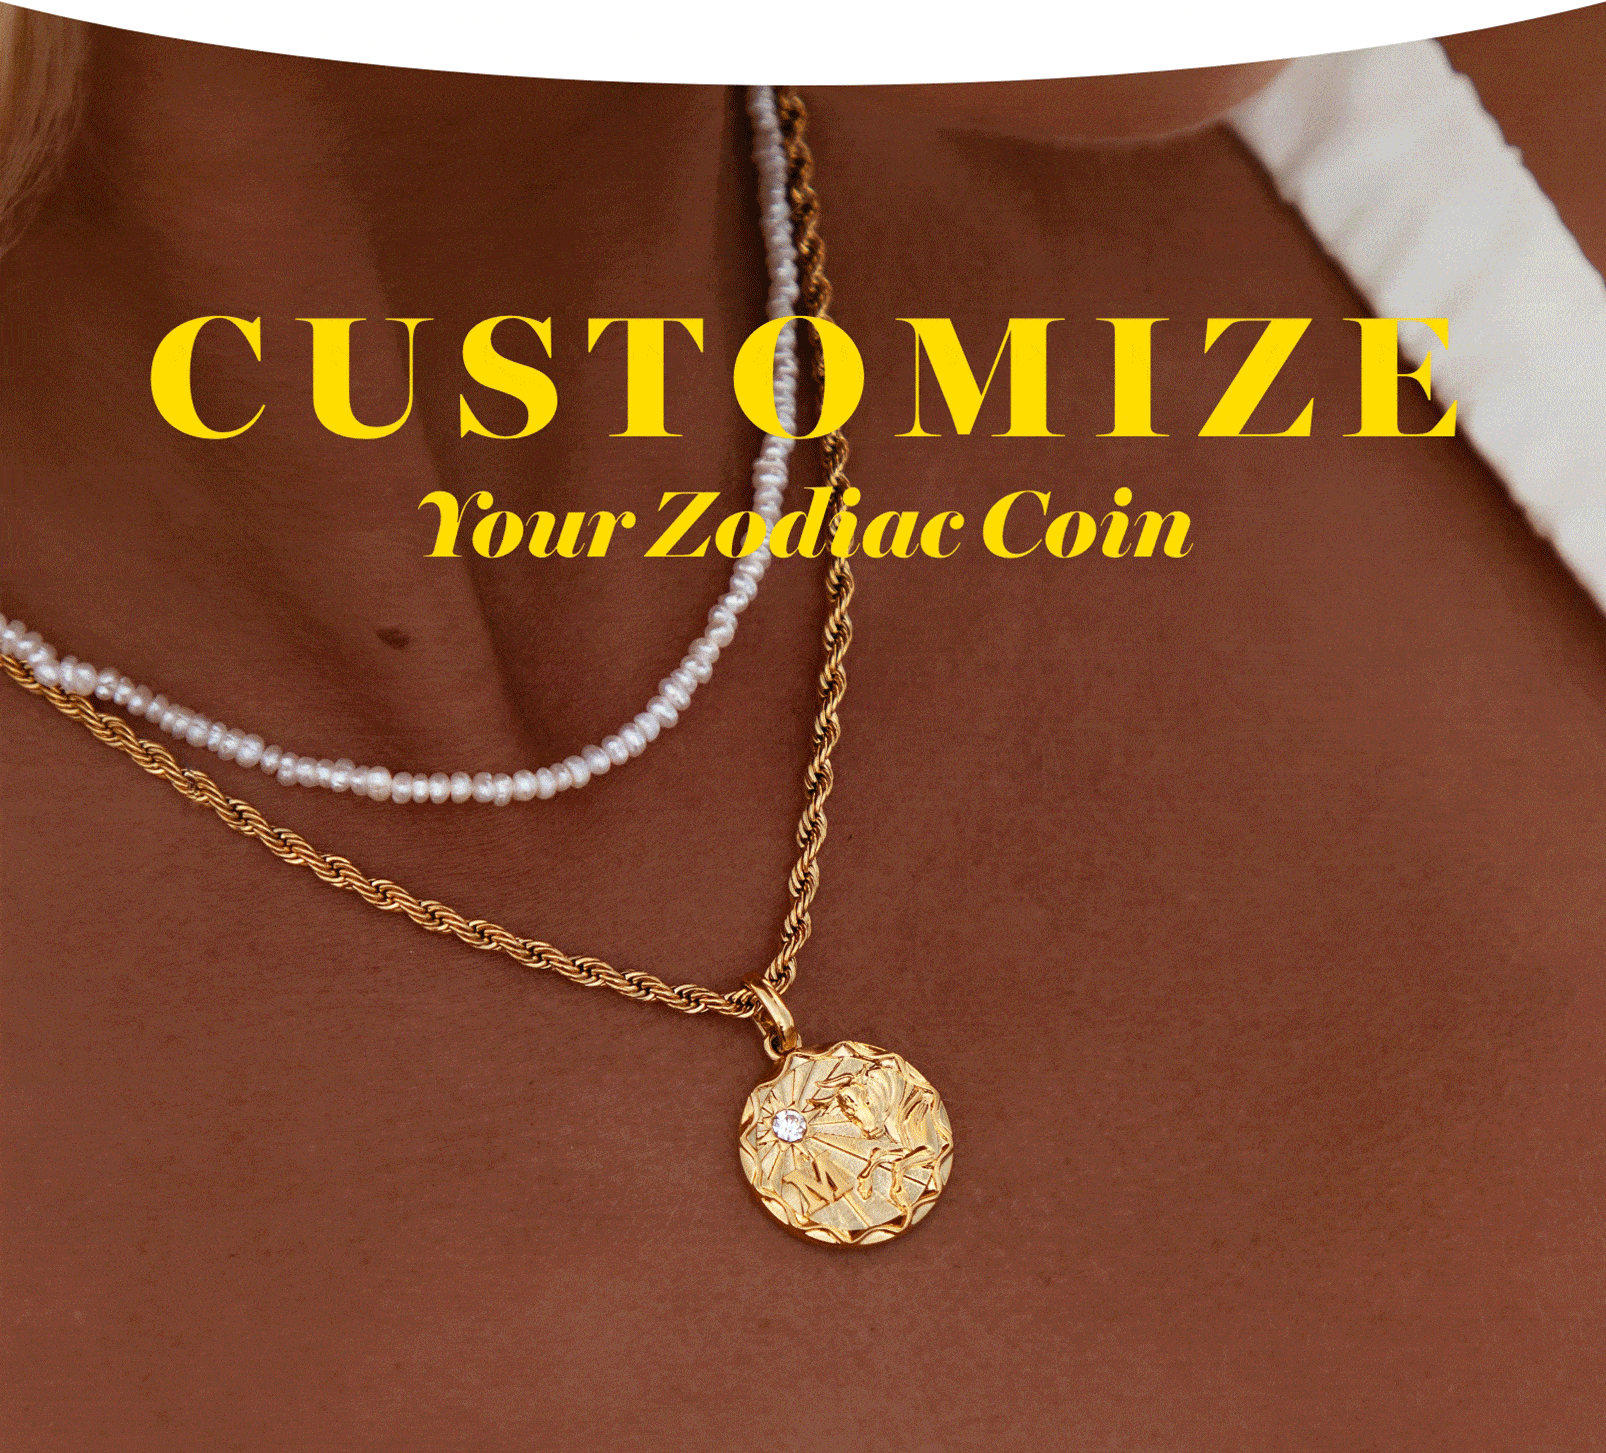 Customise your zodiac coin